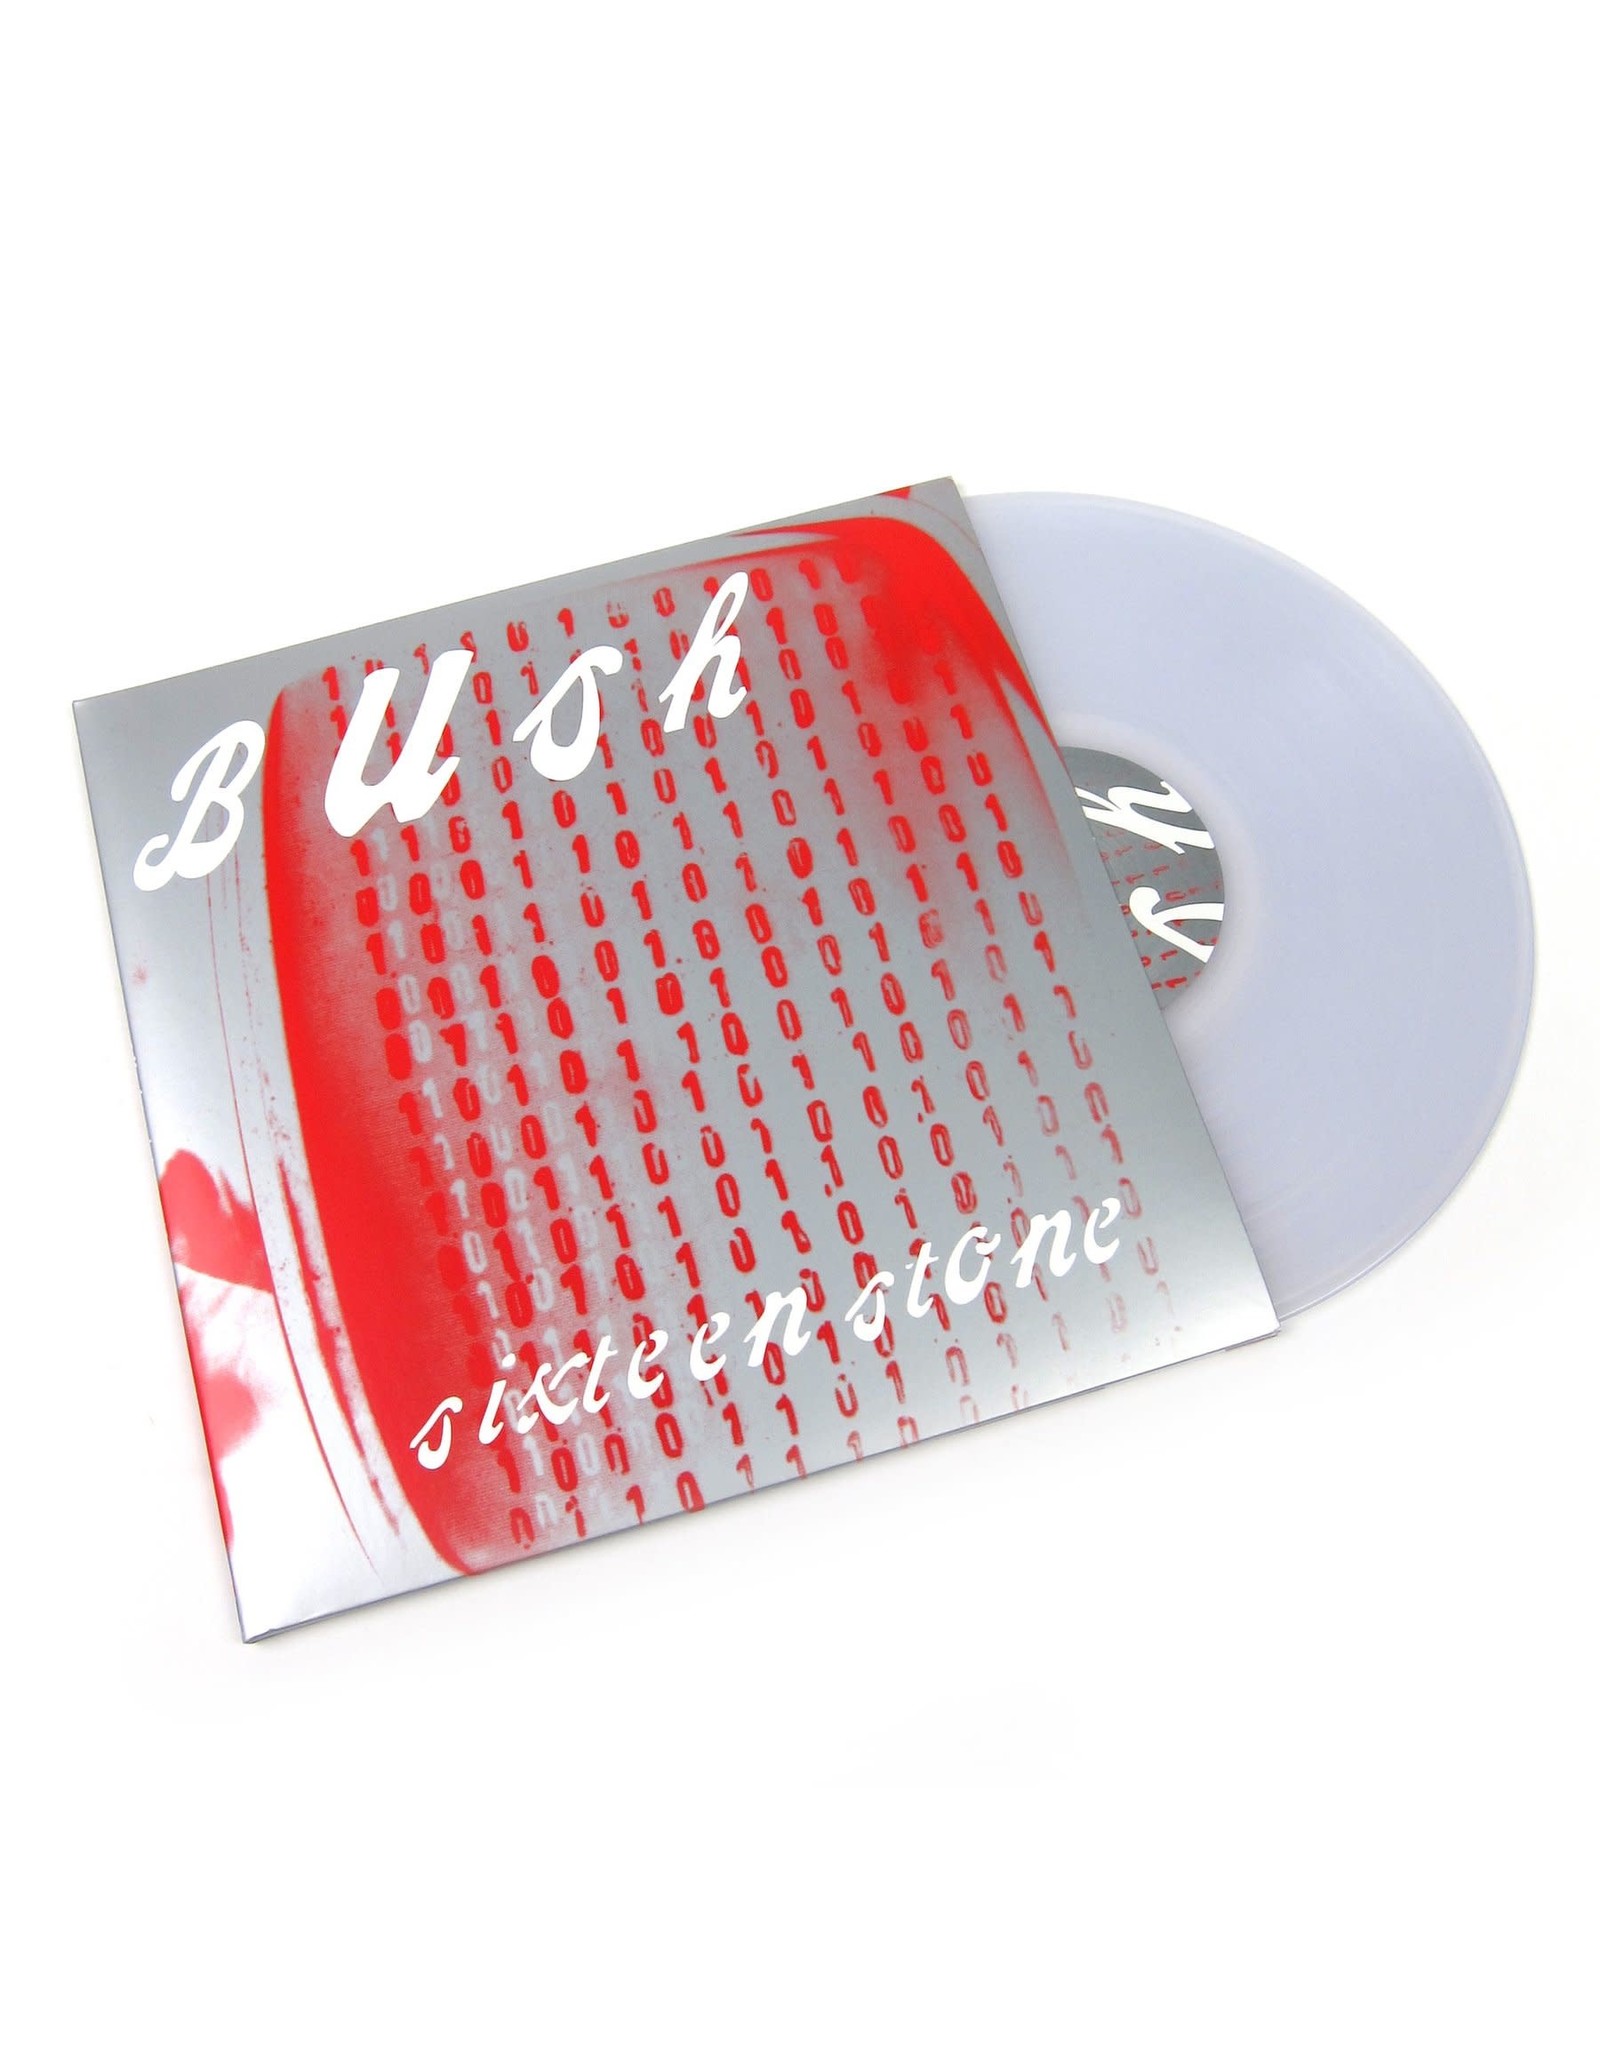 Bush - Sixteen Stone (20th Anniversary) [Clear Vinyl]